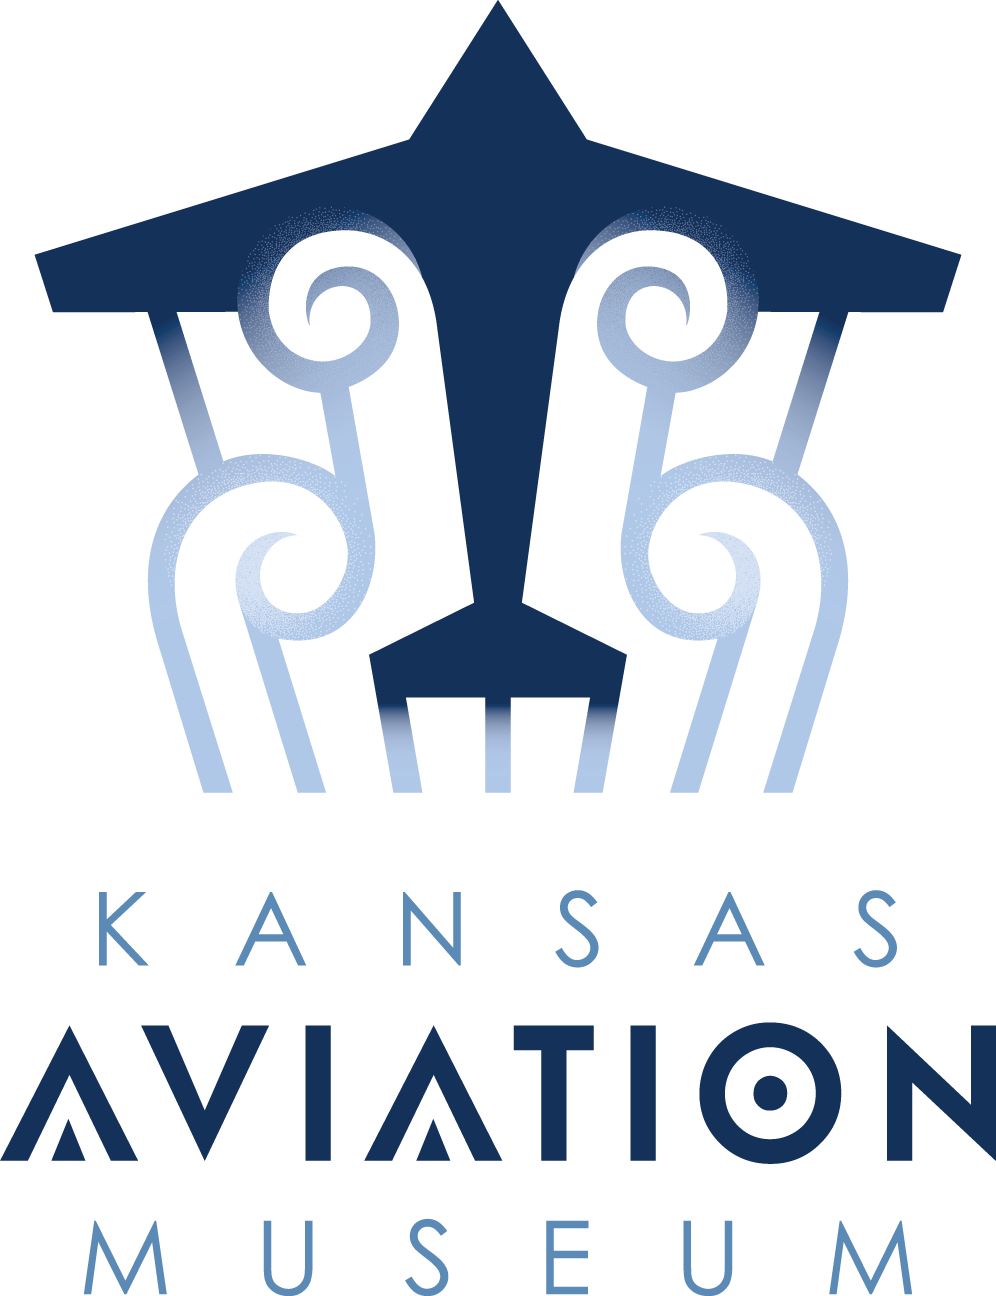 Ascension_Personalized_Care_ACA_Health_plans_Kansas_Aviation_center